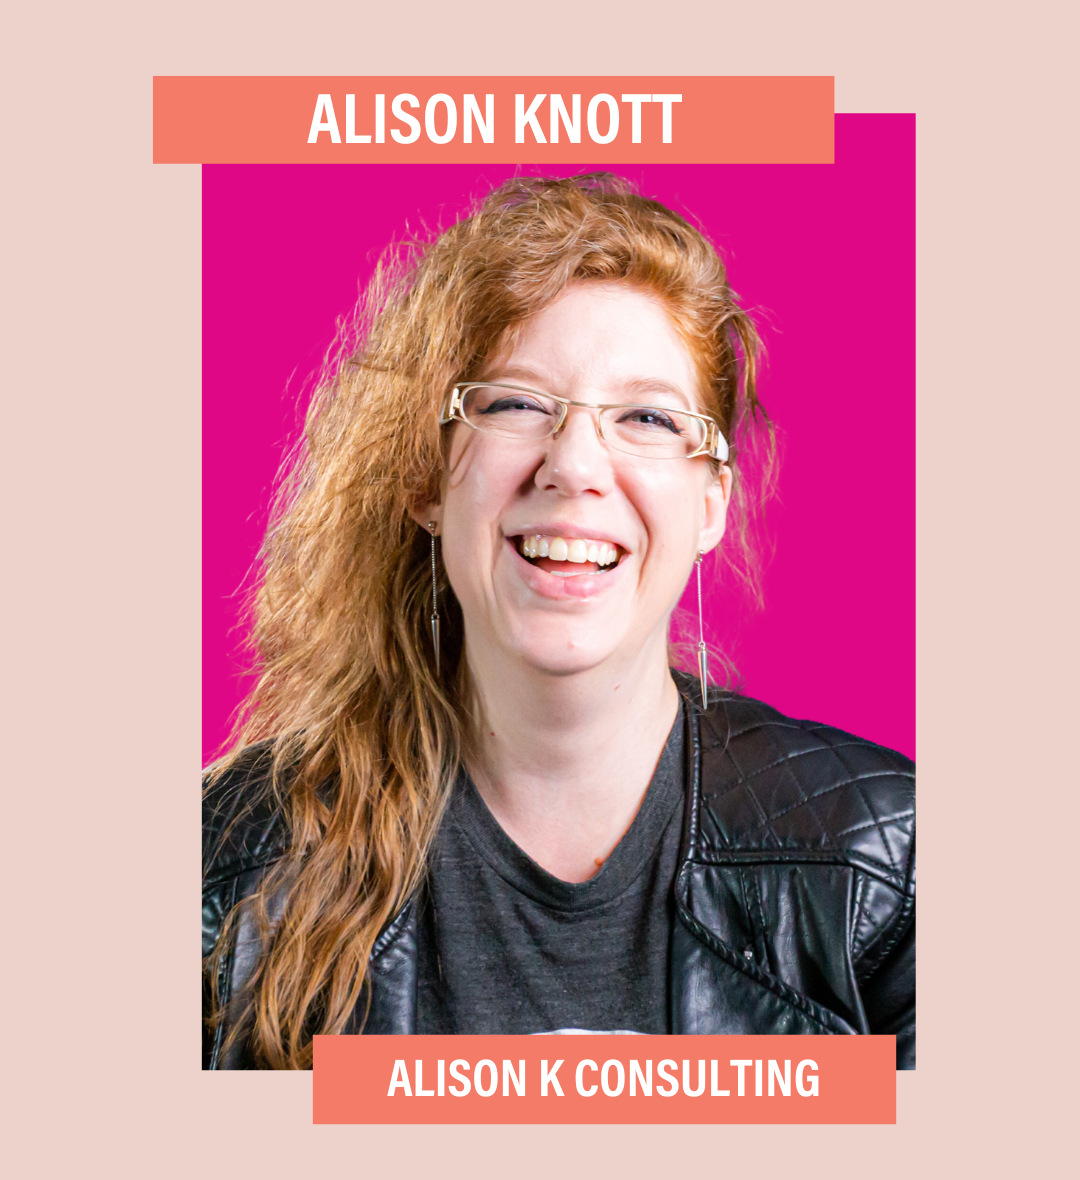 Alison Knott